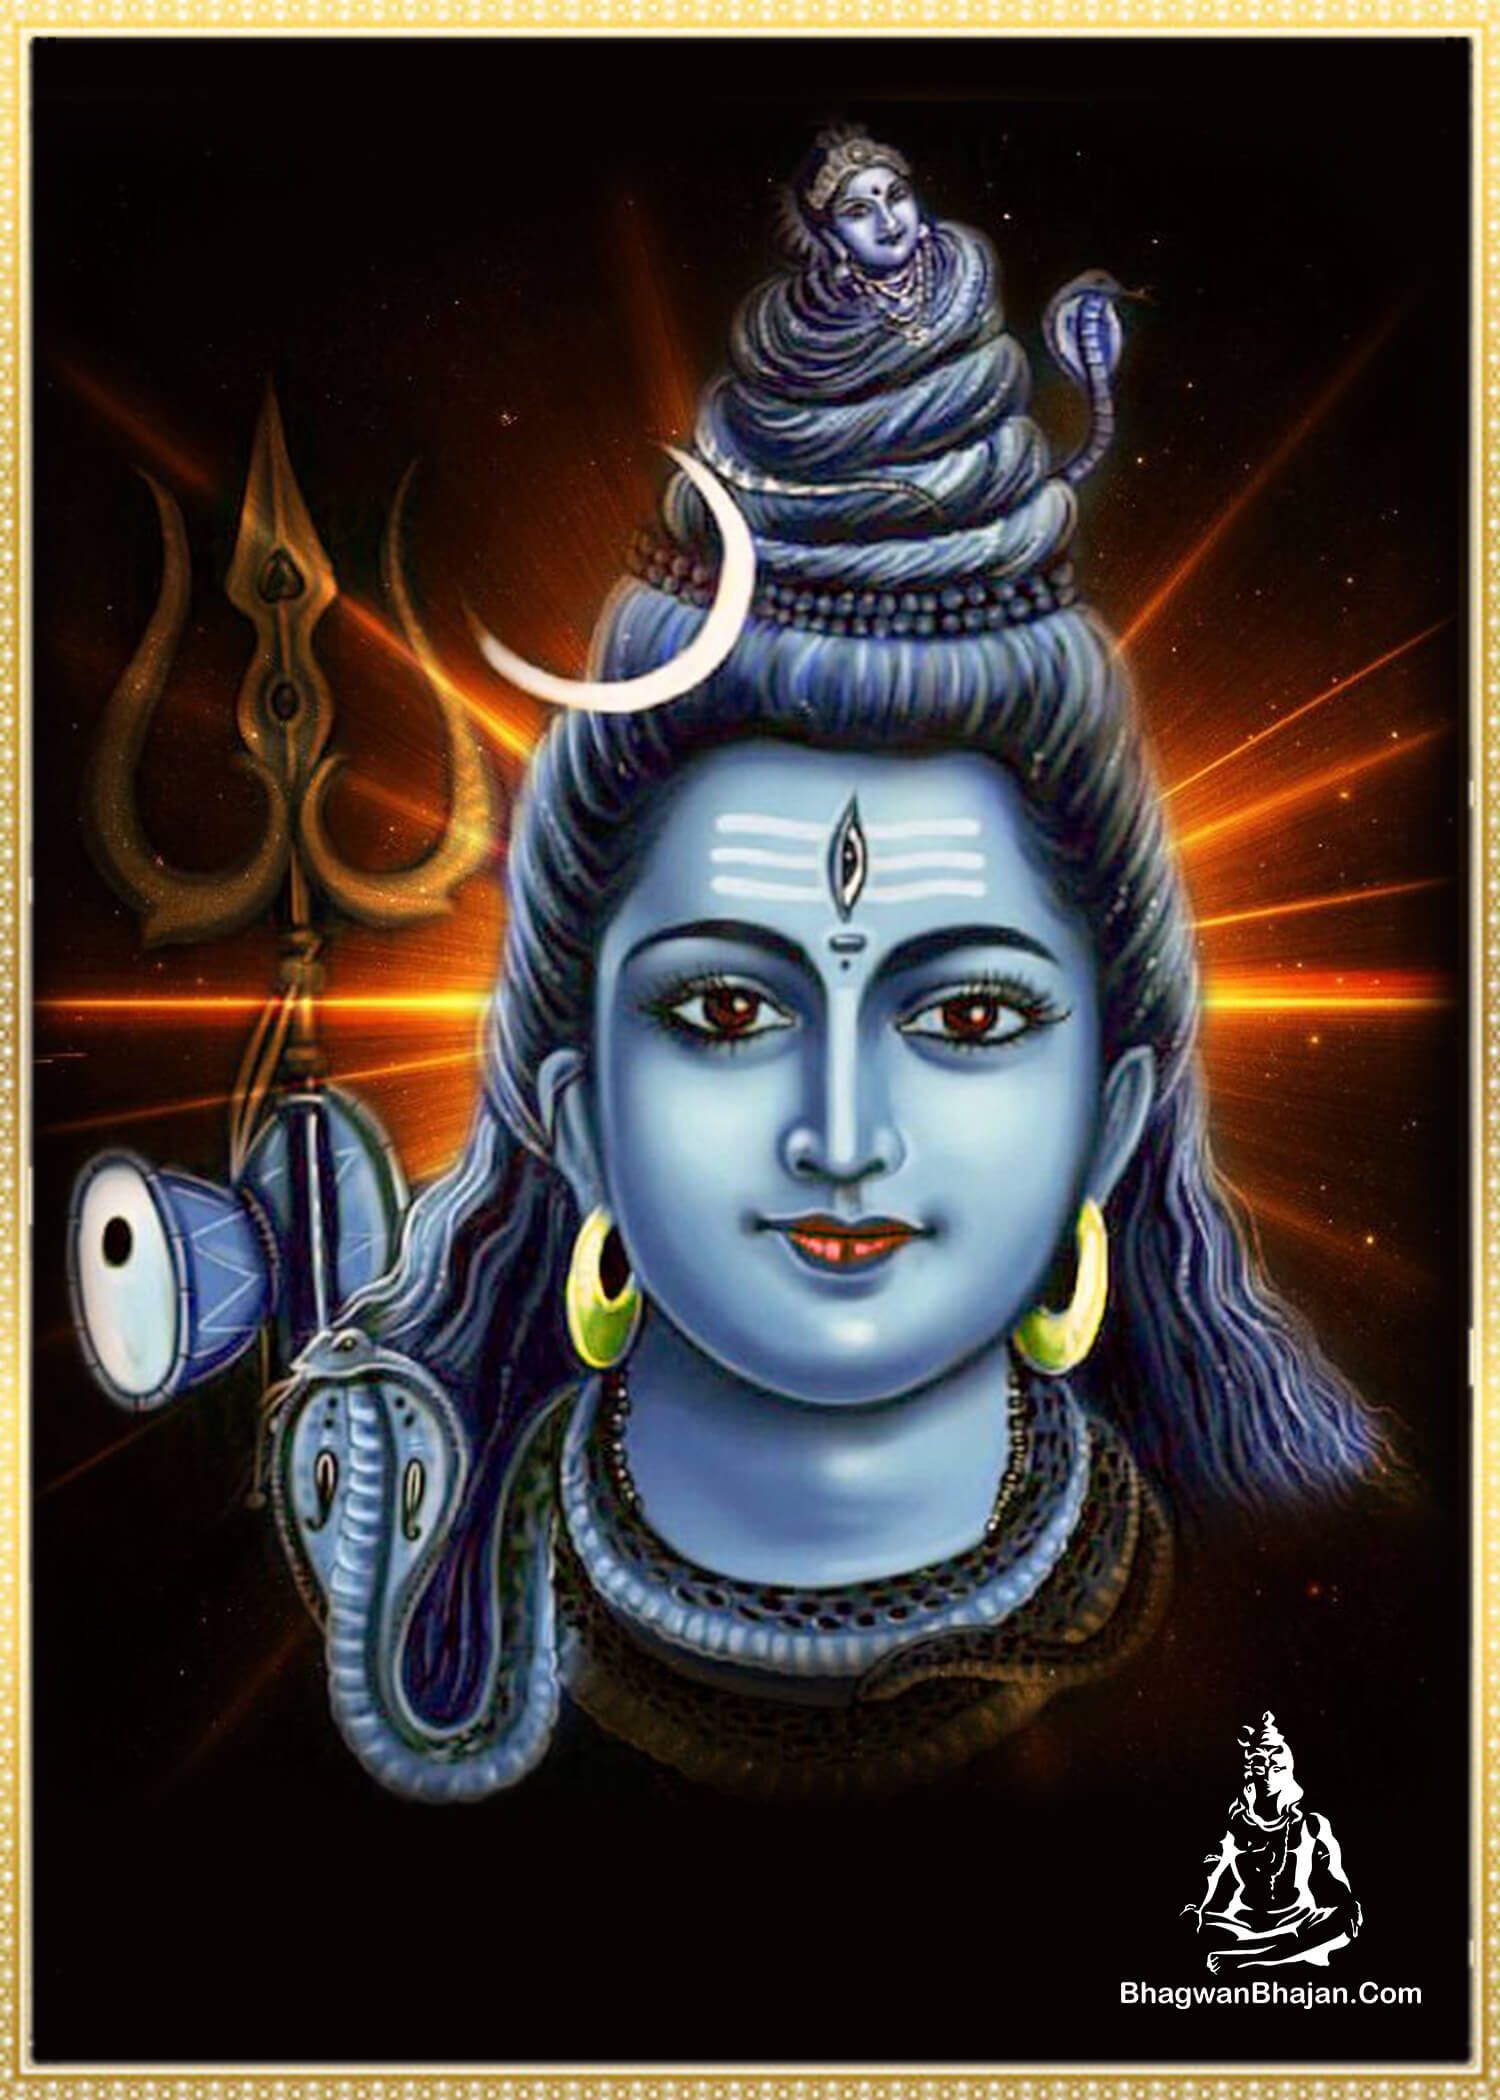 Bhagwan Shiv Image & Wallpaper. Download Free HD Wallpaper, Photos & Image of Lord Shiv Shankar